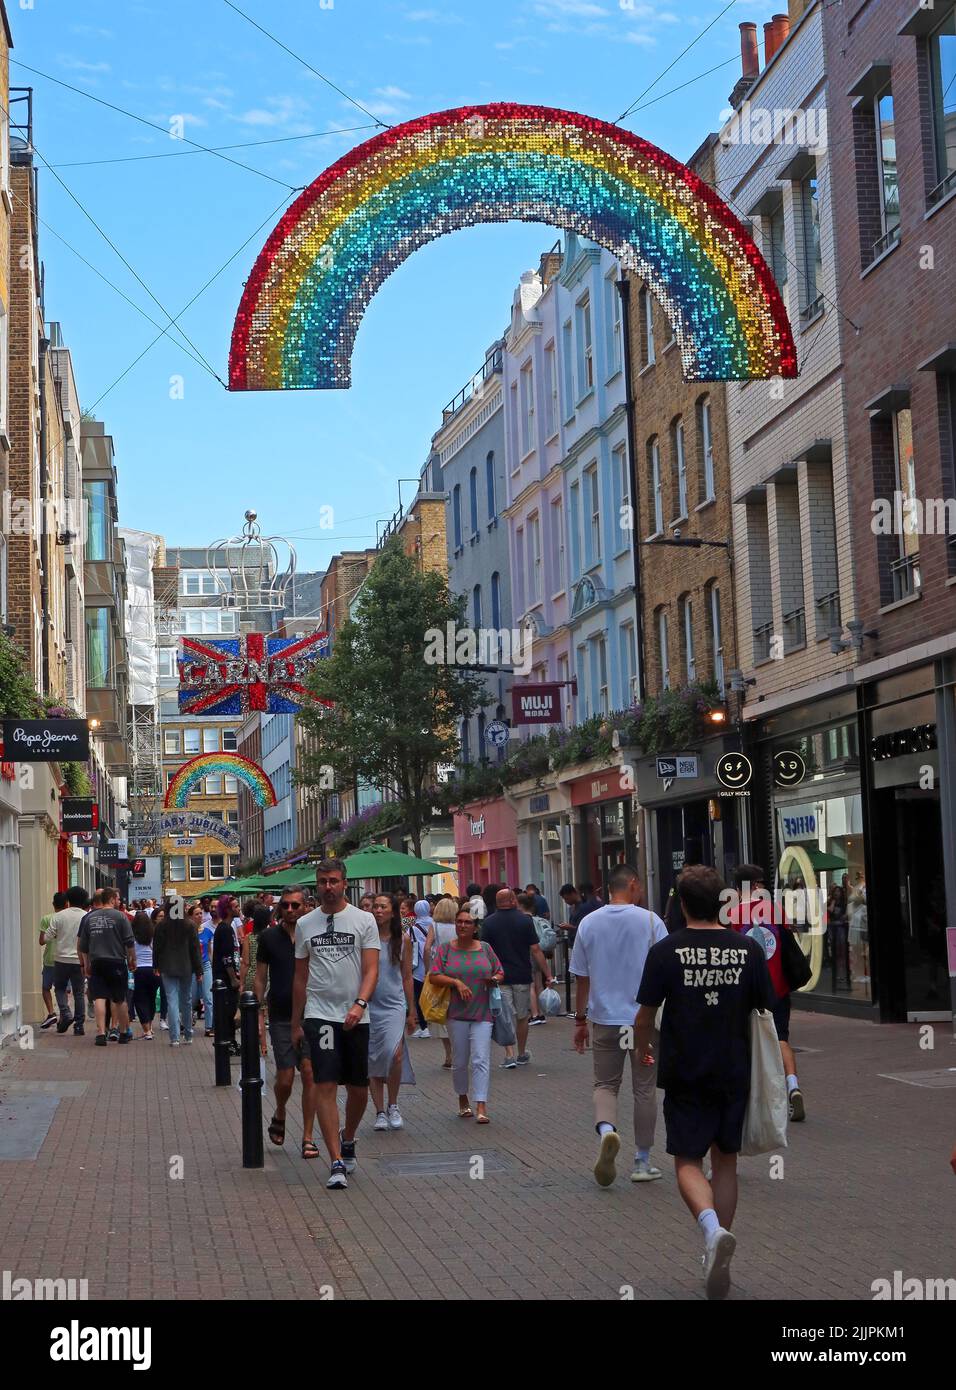 Pride LGBTQ Rainbow ci-dessus dans la célèbre Carnaby Street, Soho, Londres, Angleterre, Royaume-Uni, W1F 9PS Banque D'Images